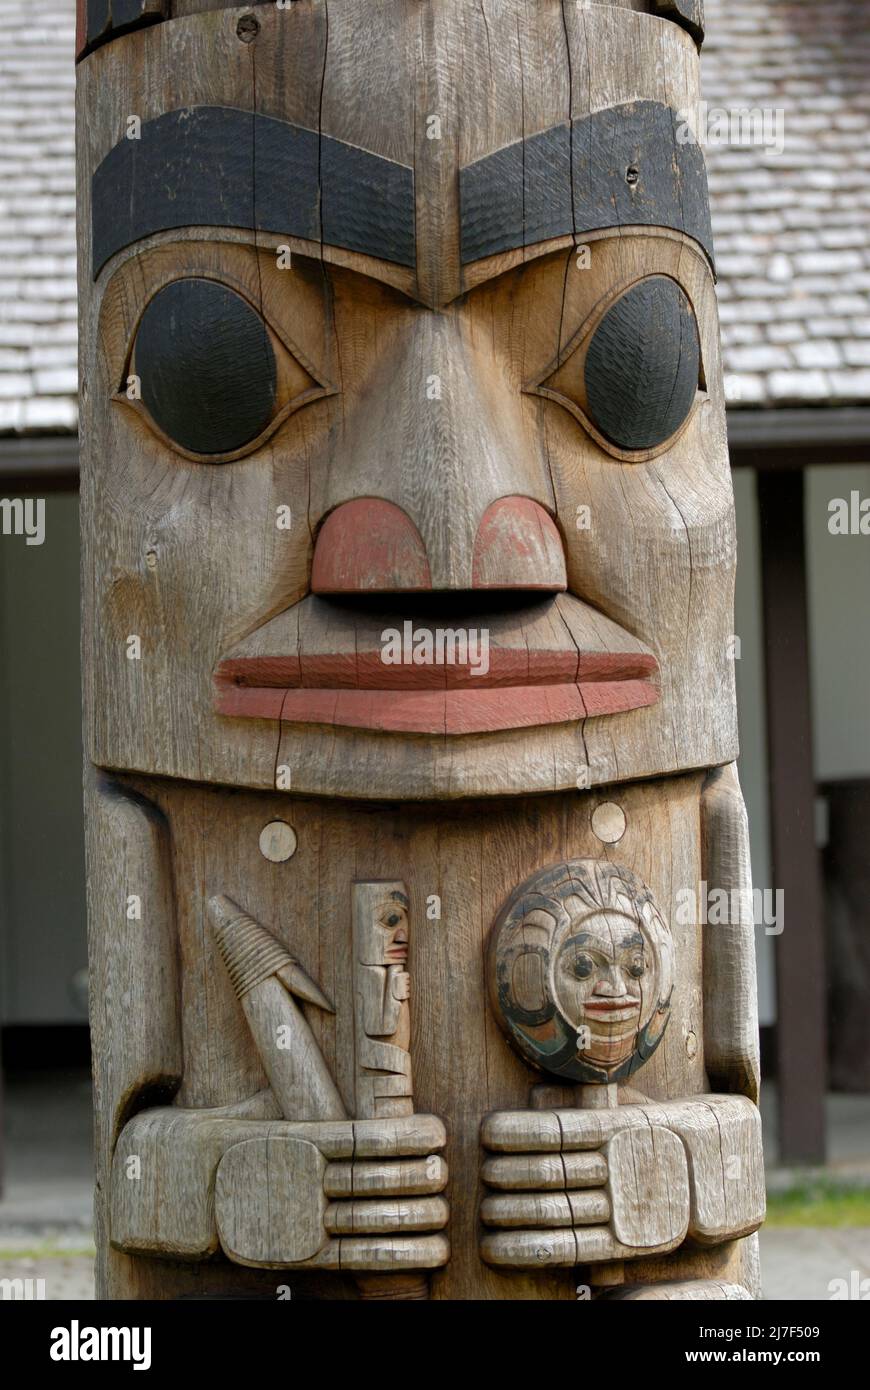 Totem pole of the Tlingit people in Alaska. Stock Photo